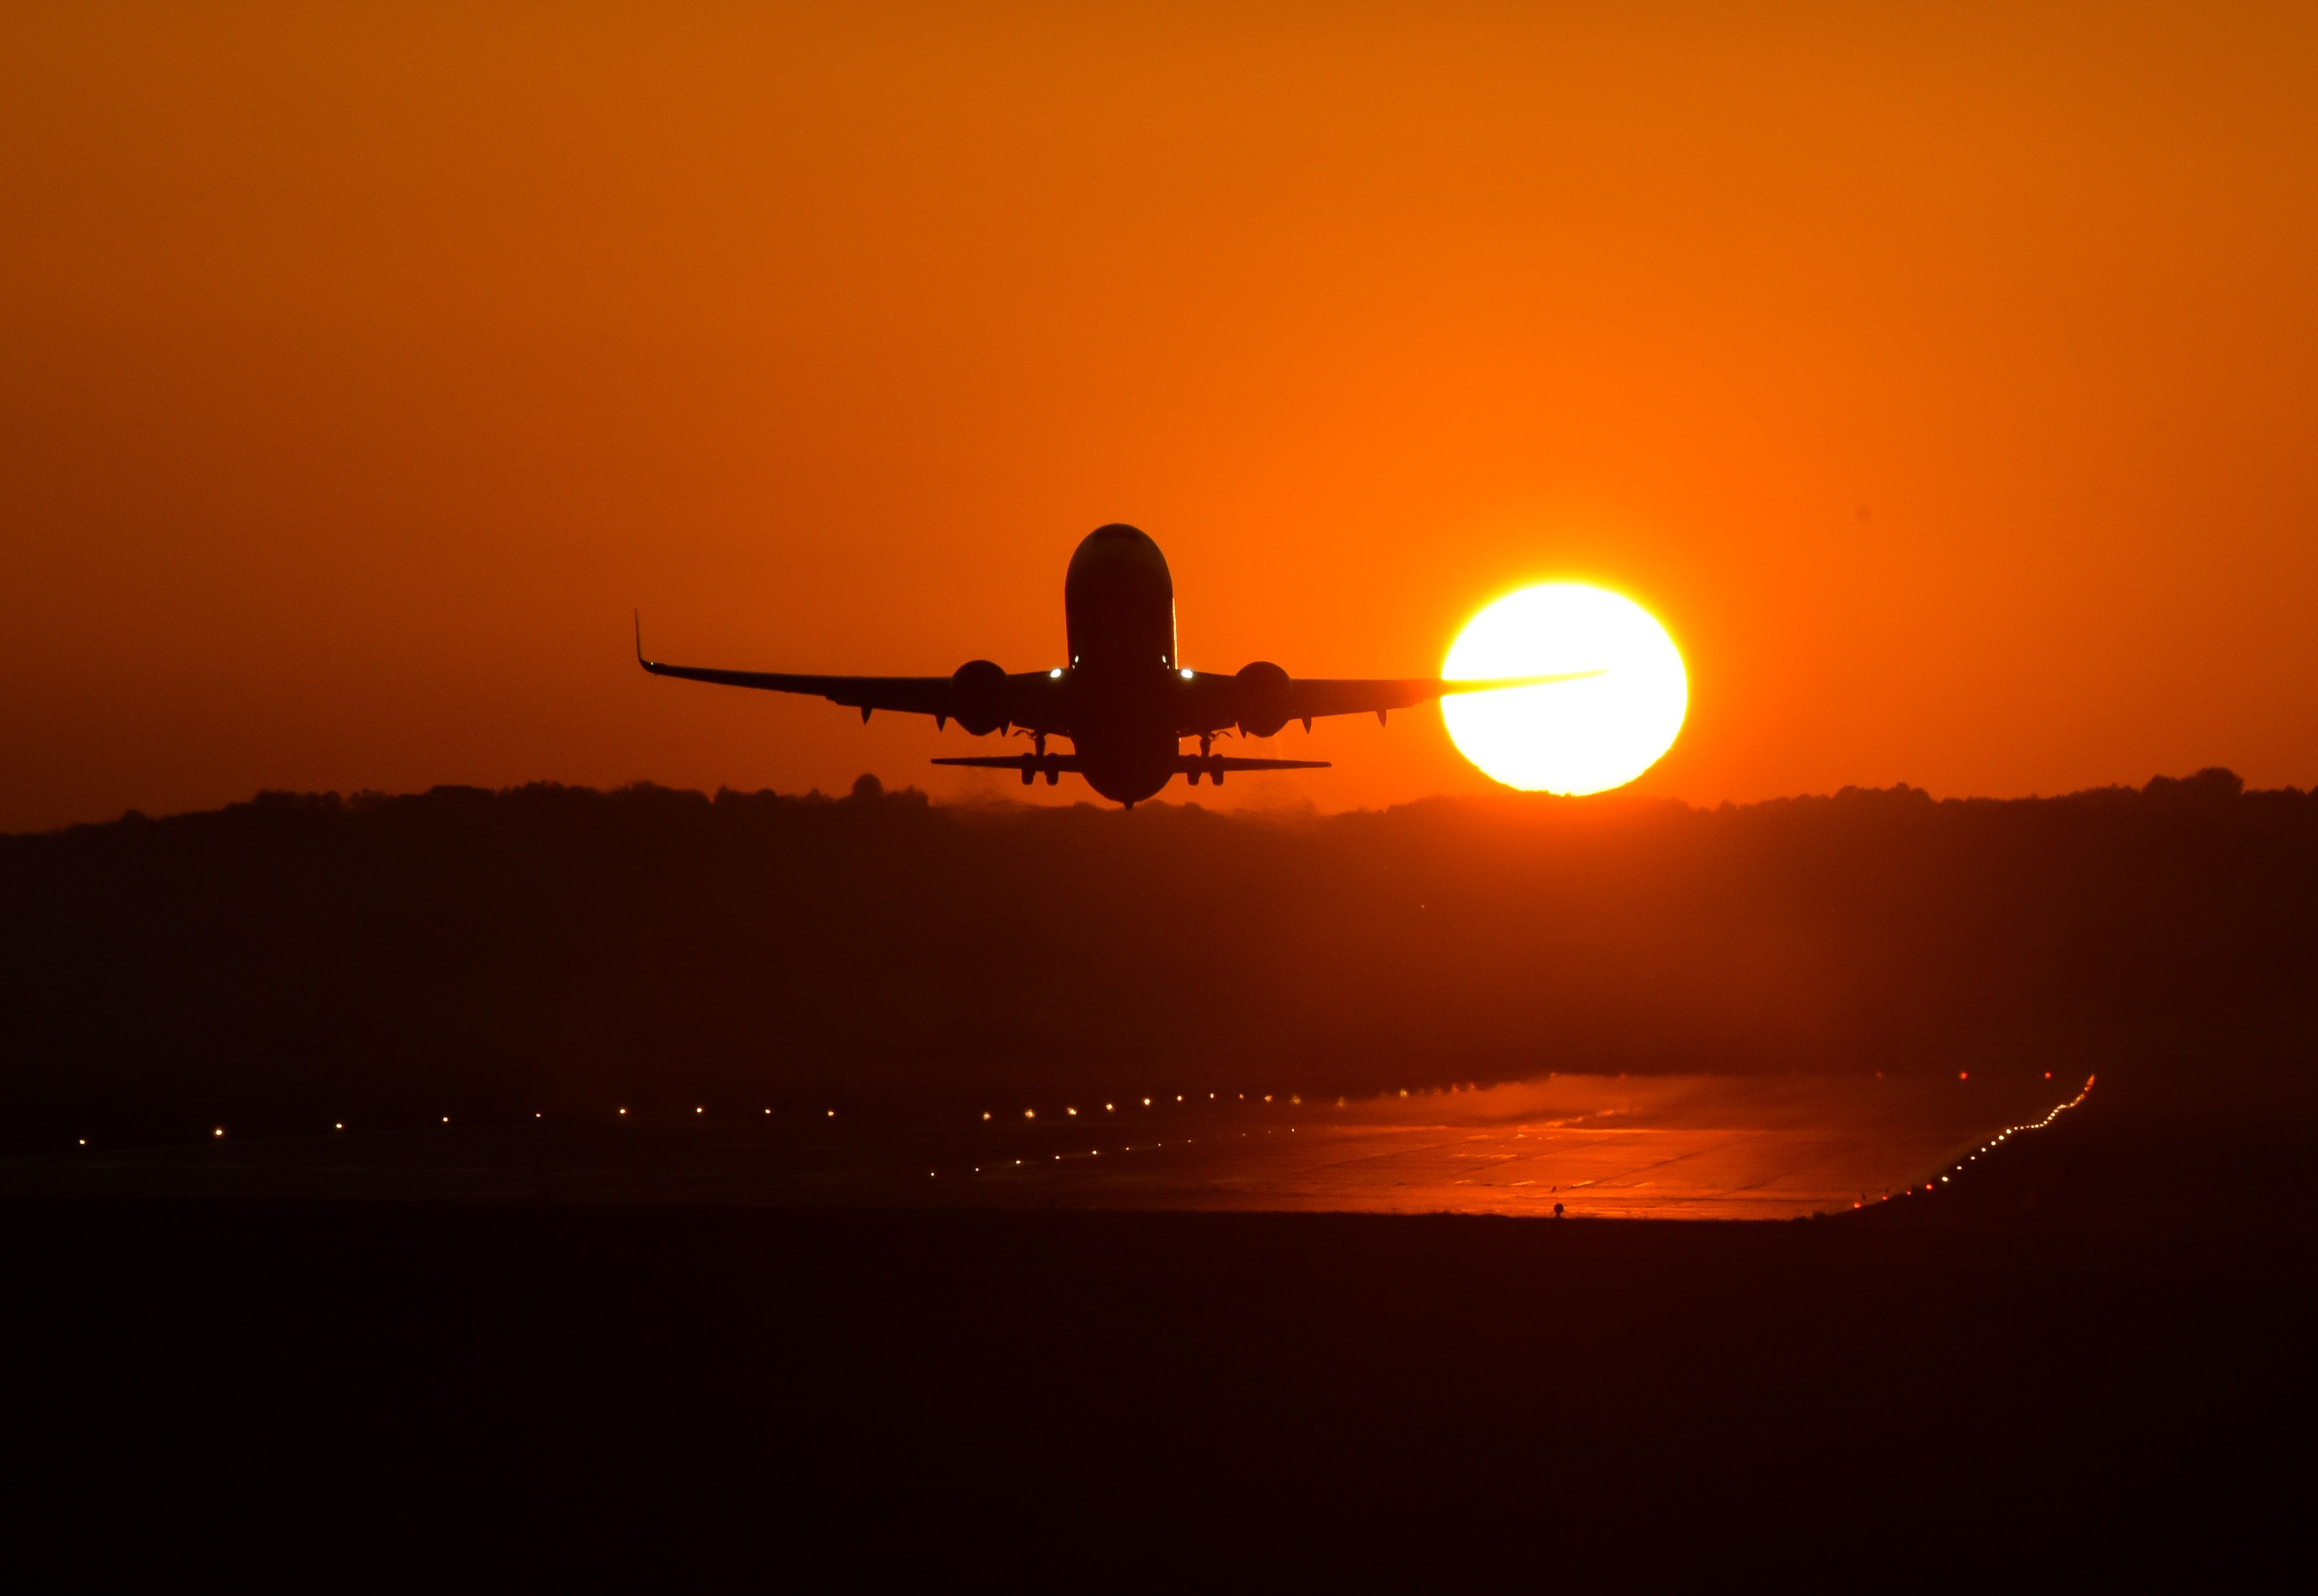 Aircraft taking off at sunset